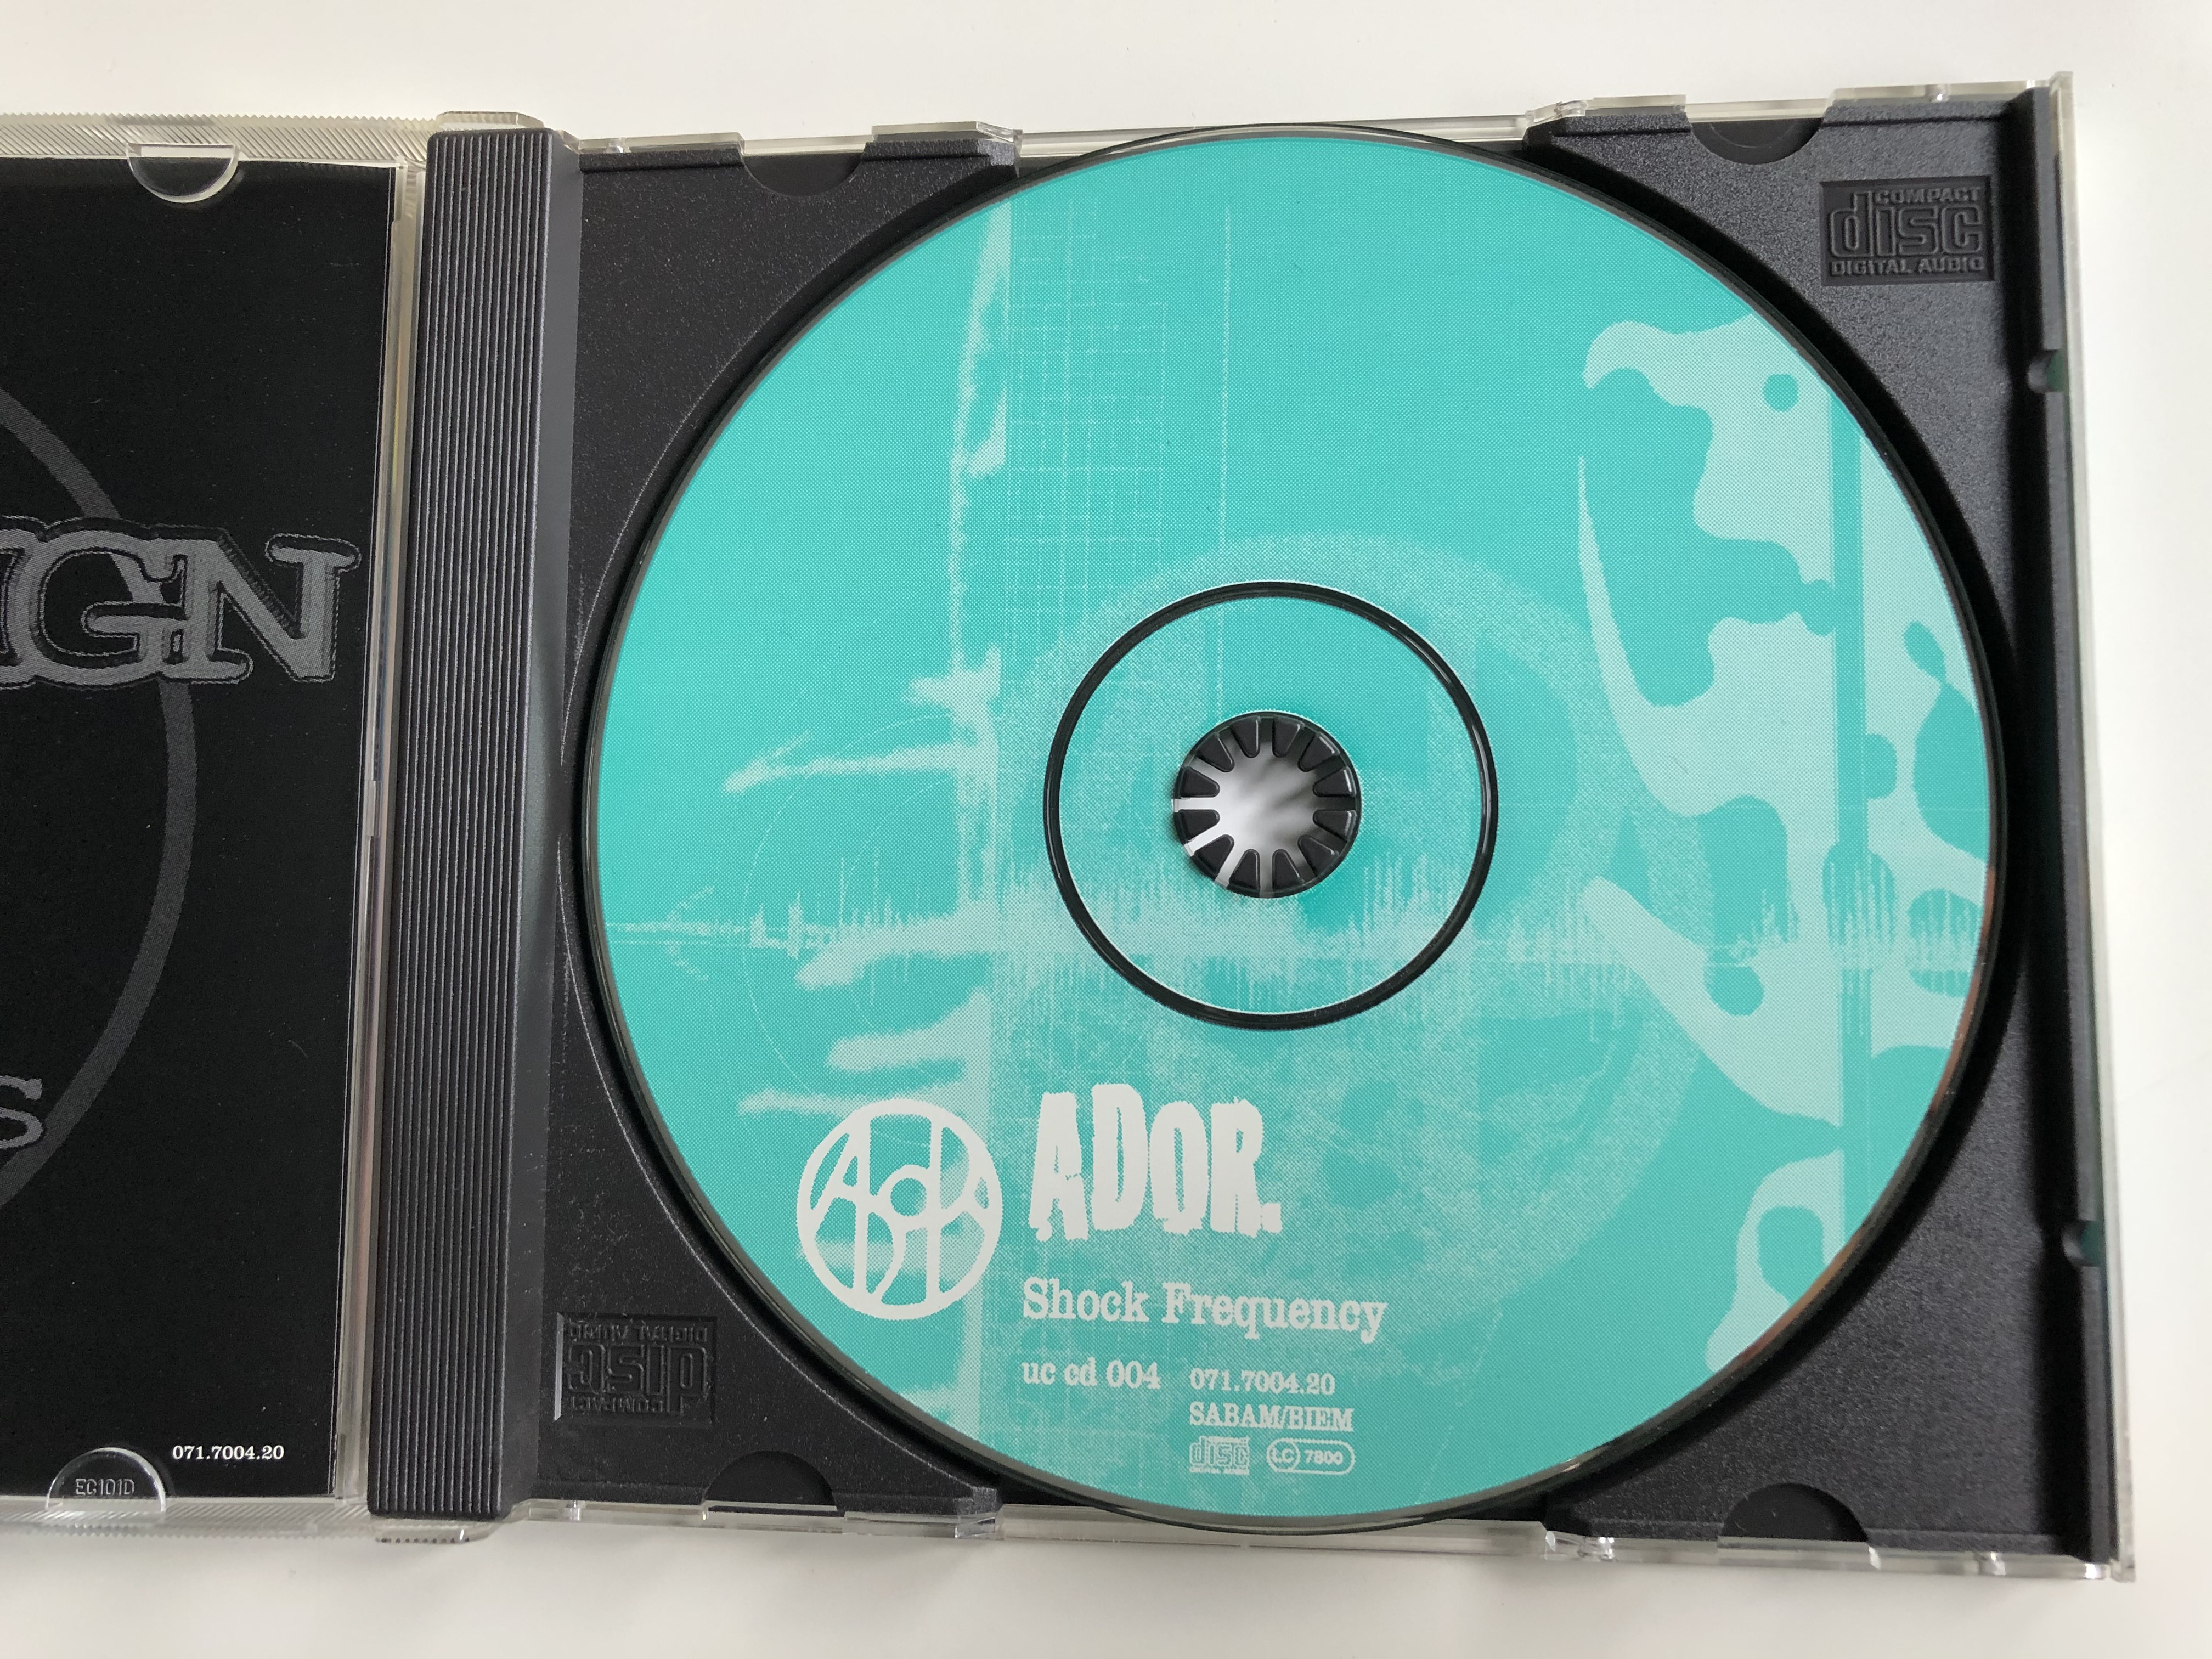 a.d.o.r.-shock-frequency-tru-reign-records-audio-cd-1998-uc-cd-004-2-.jpg